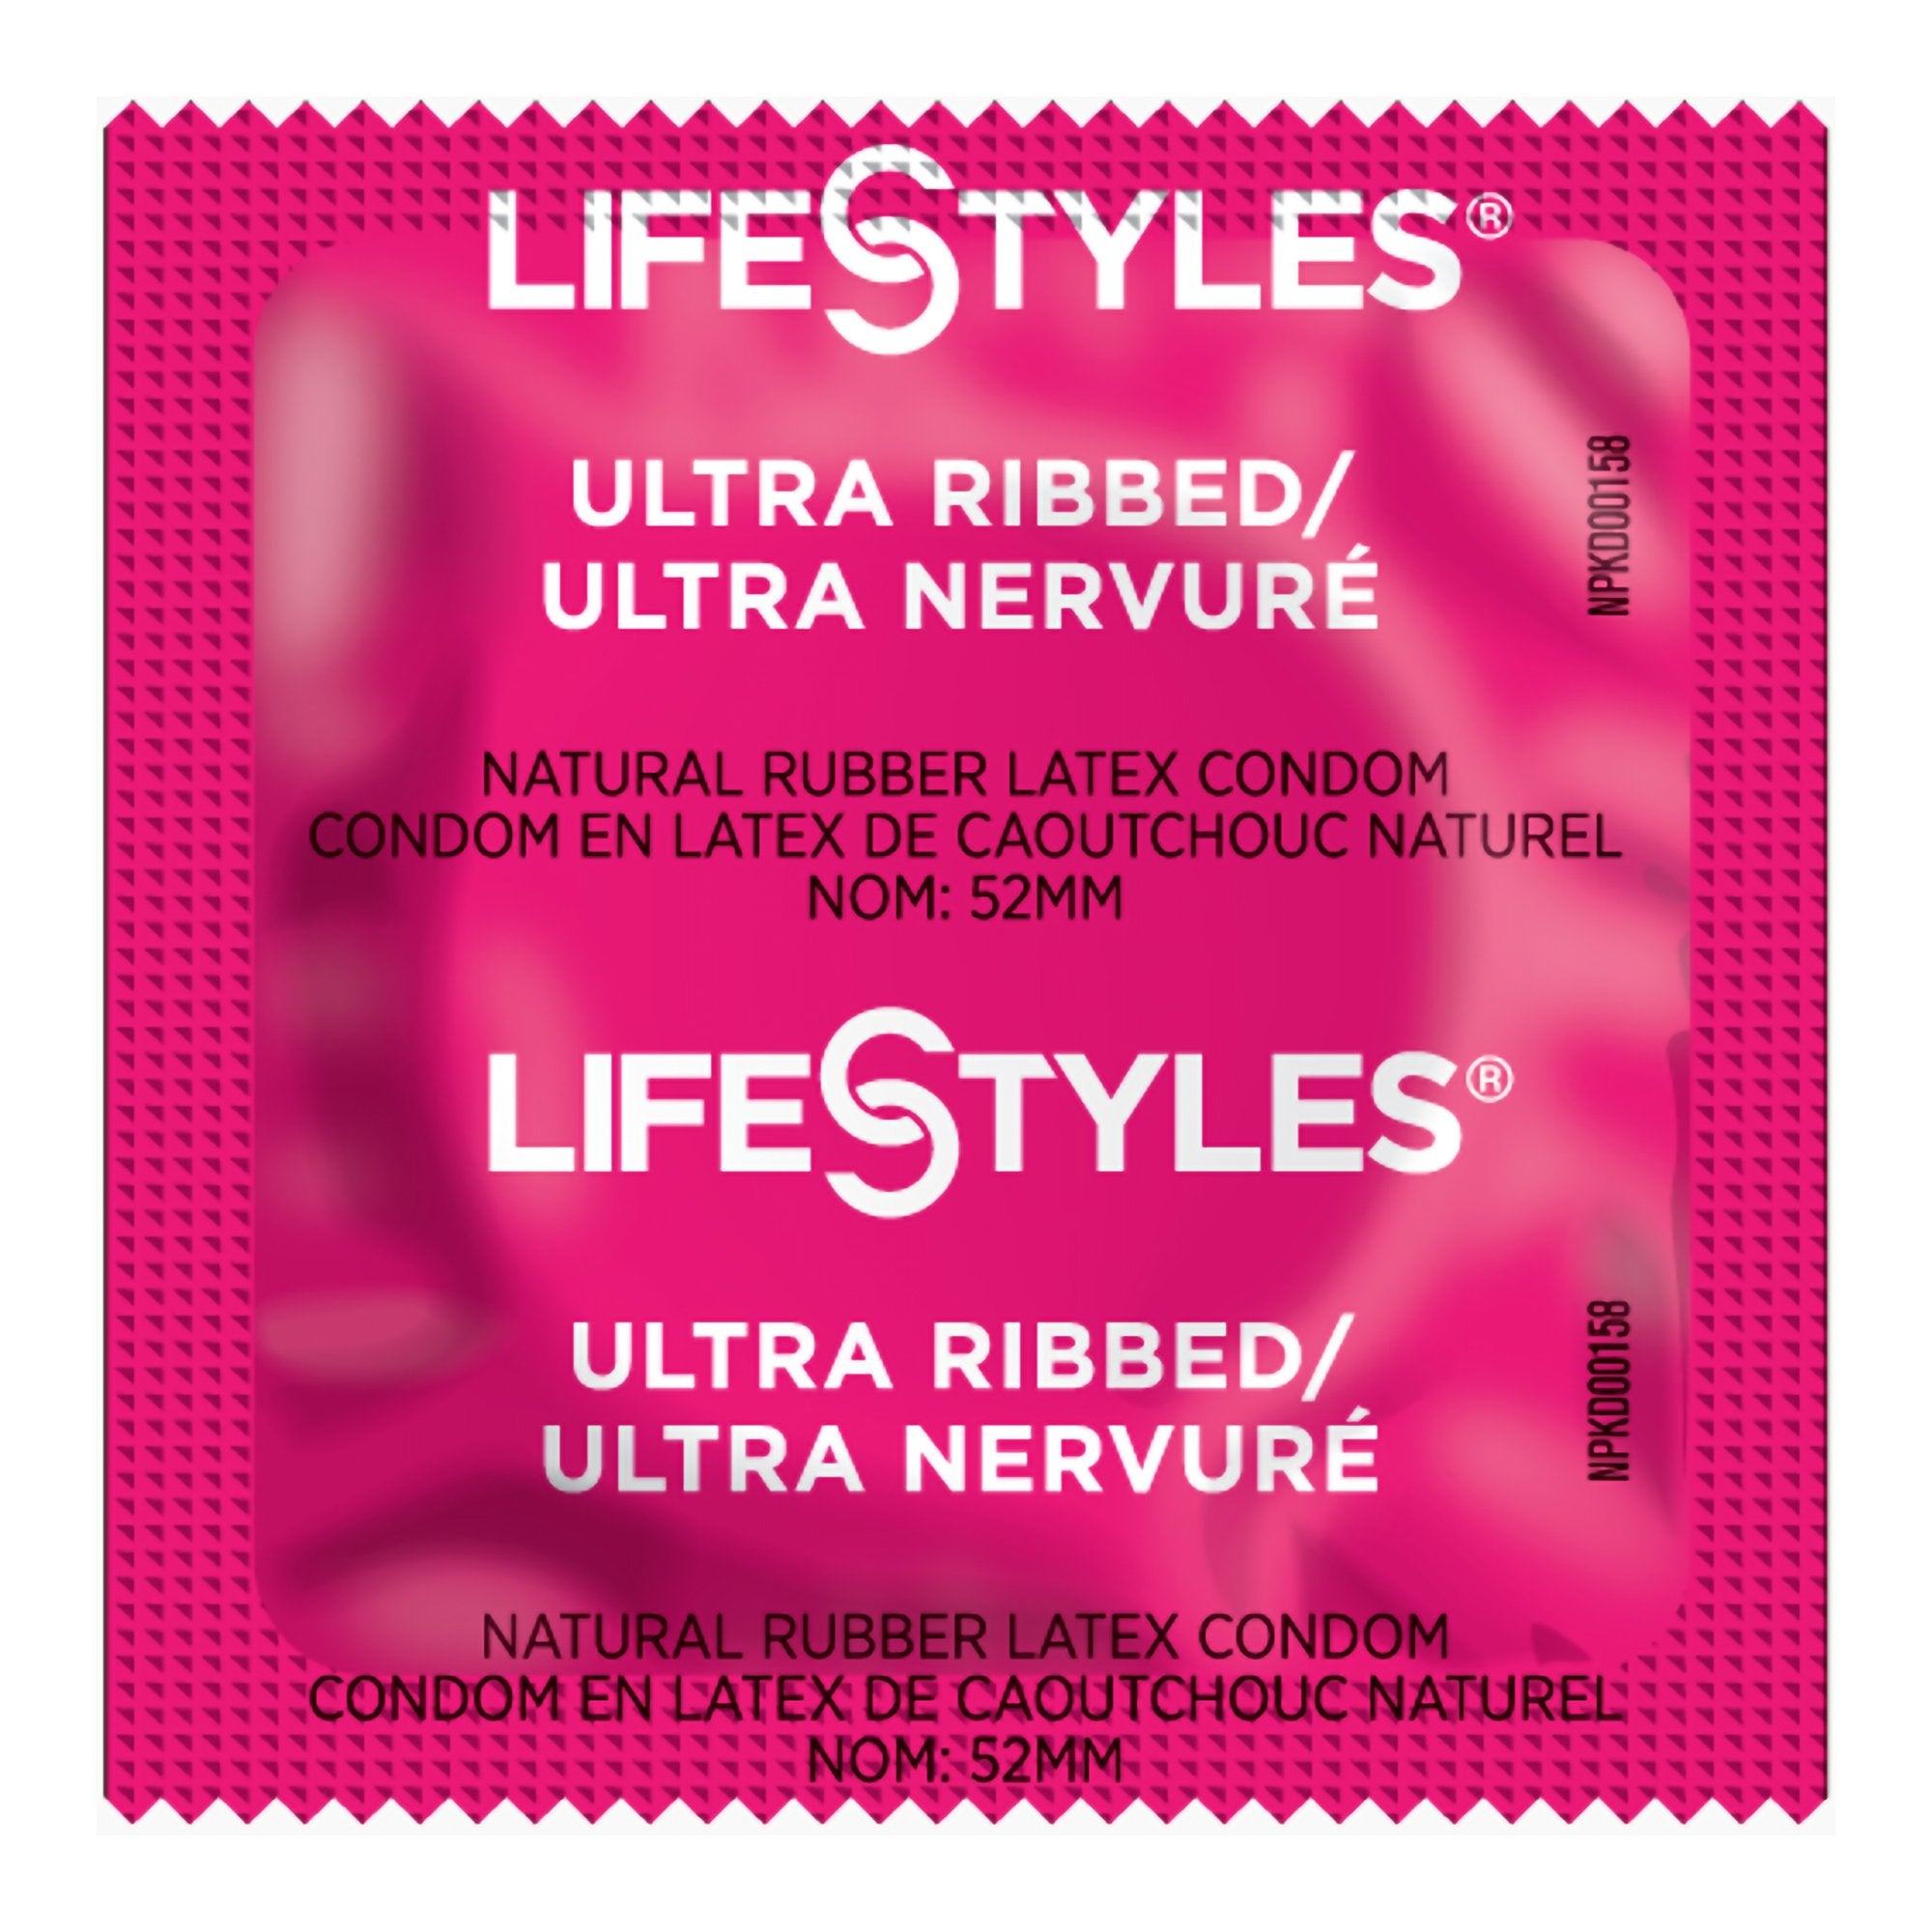 Lifestyles® Ultra Ribbed Latex Condom (1 Unit)